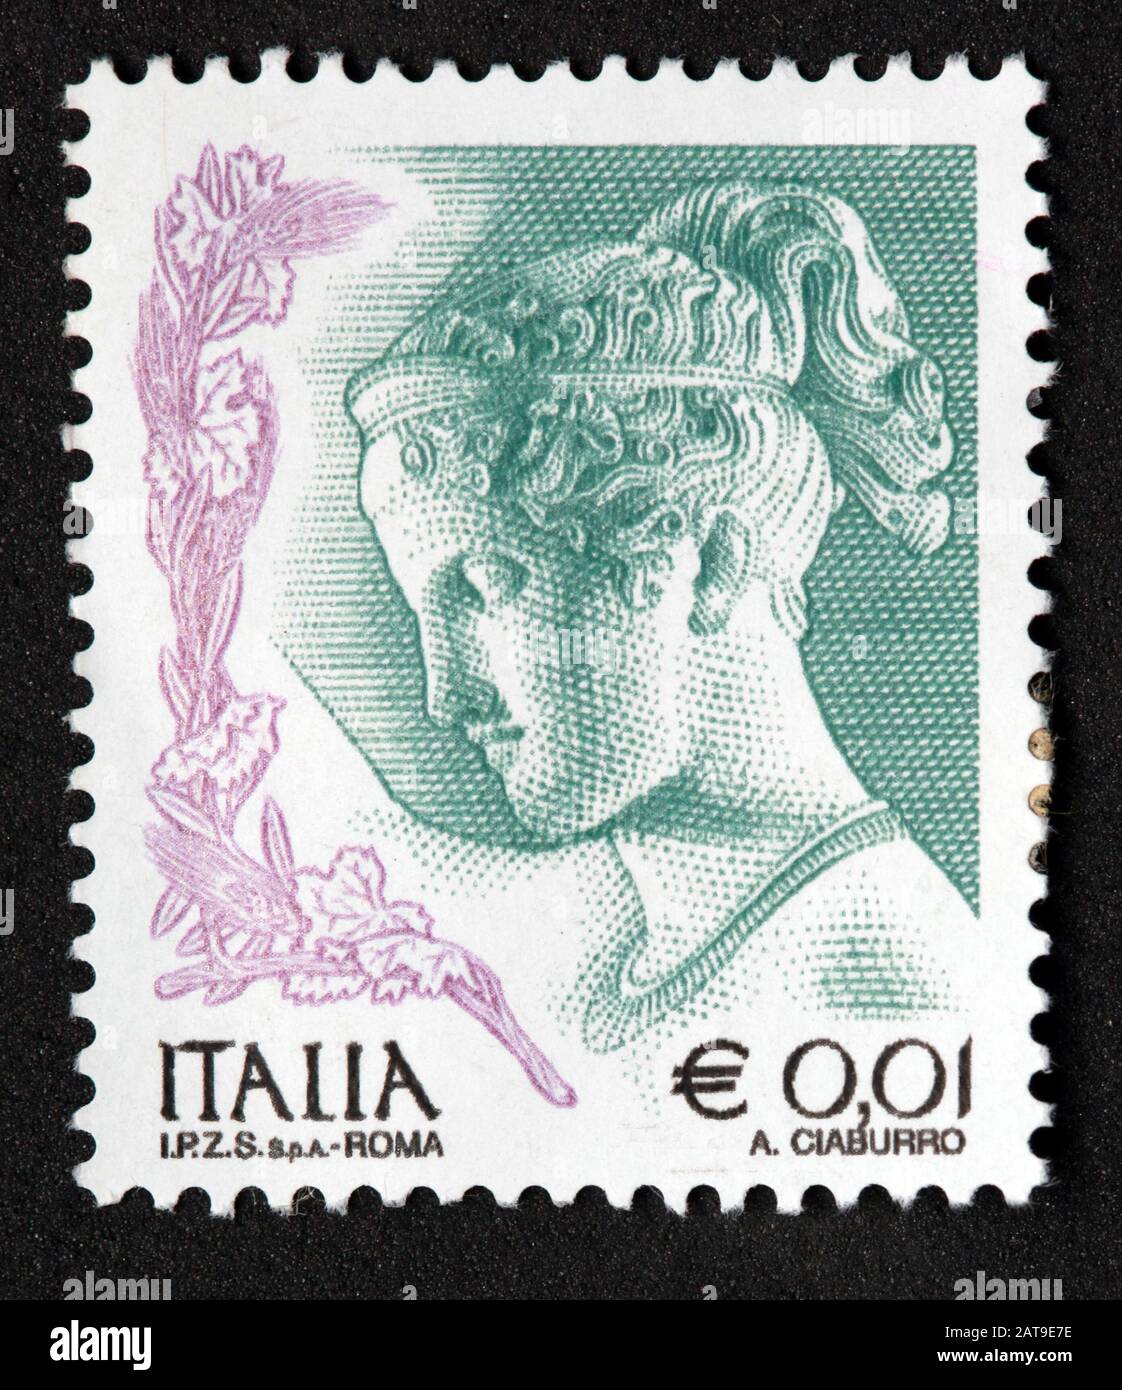 Timbre italien, poste Italia utilisé et franked Stamp, Italia E0.01 A.Ciaburro Banque D'Images